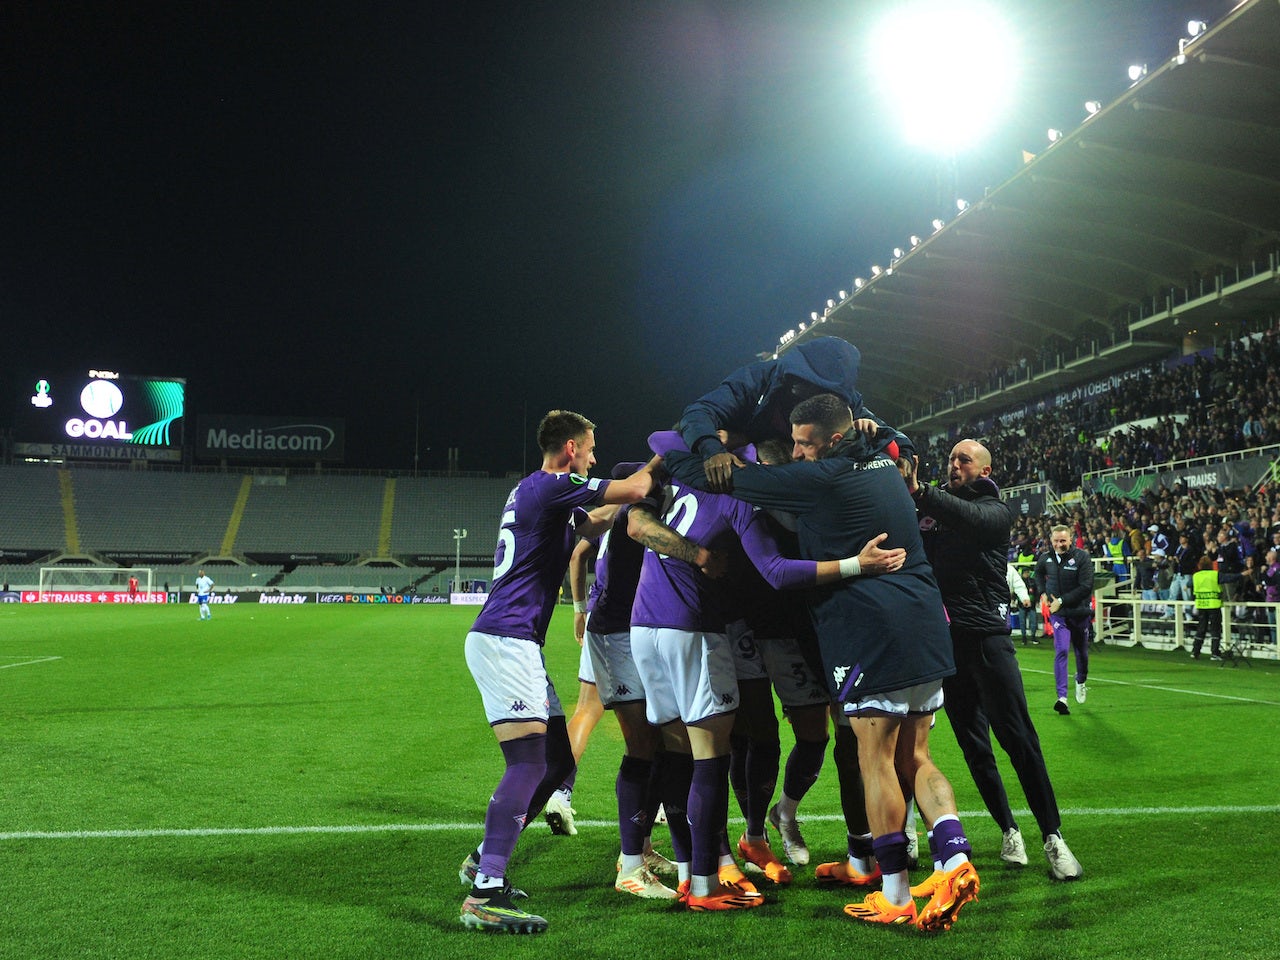 Ferencvaros vs Fiorentina Prediction and Betting Tips